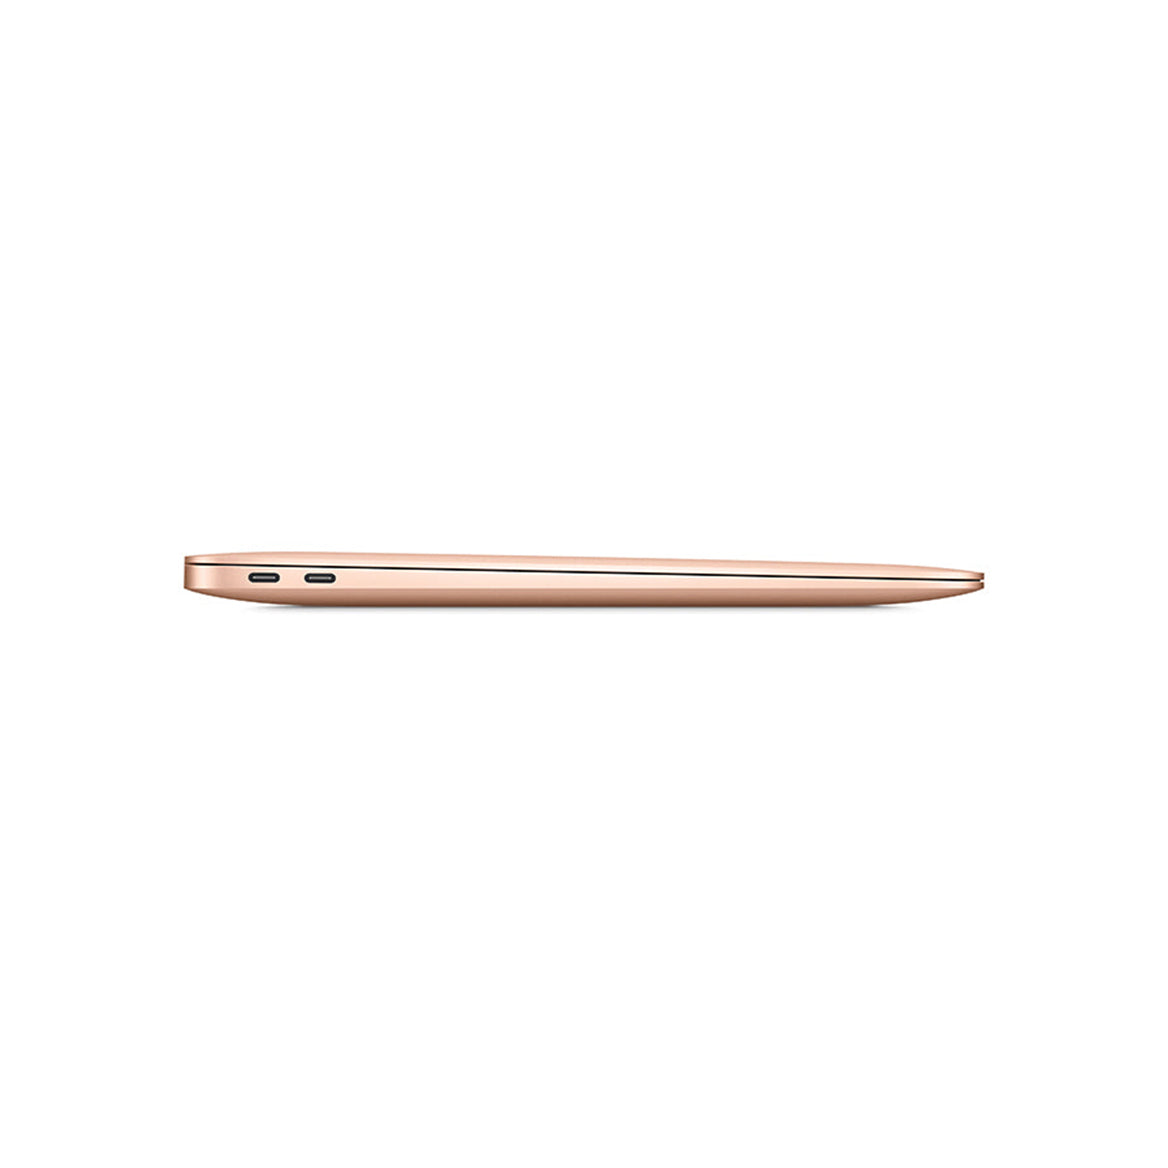 MacBook Air M1 gold 2020 1